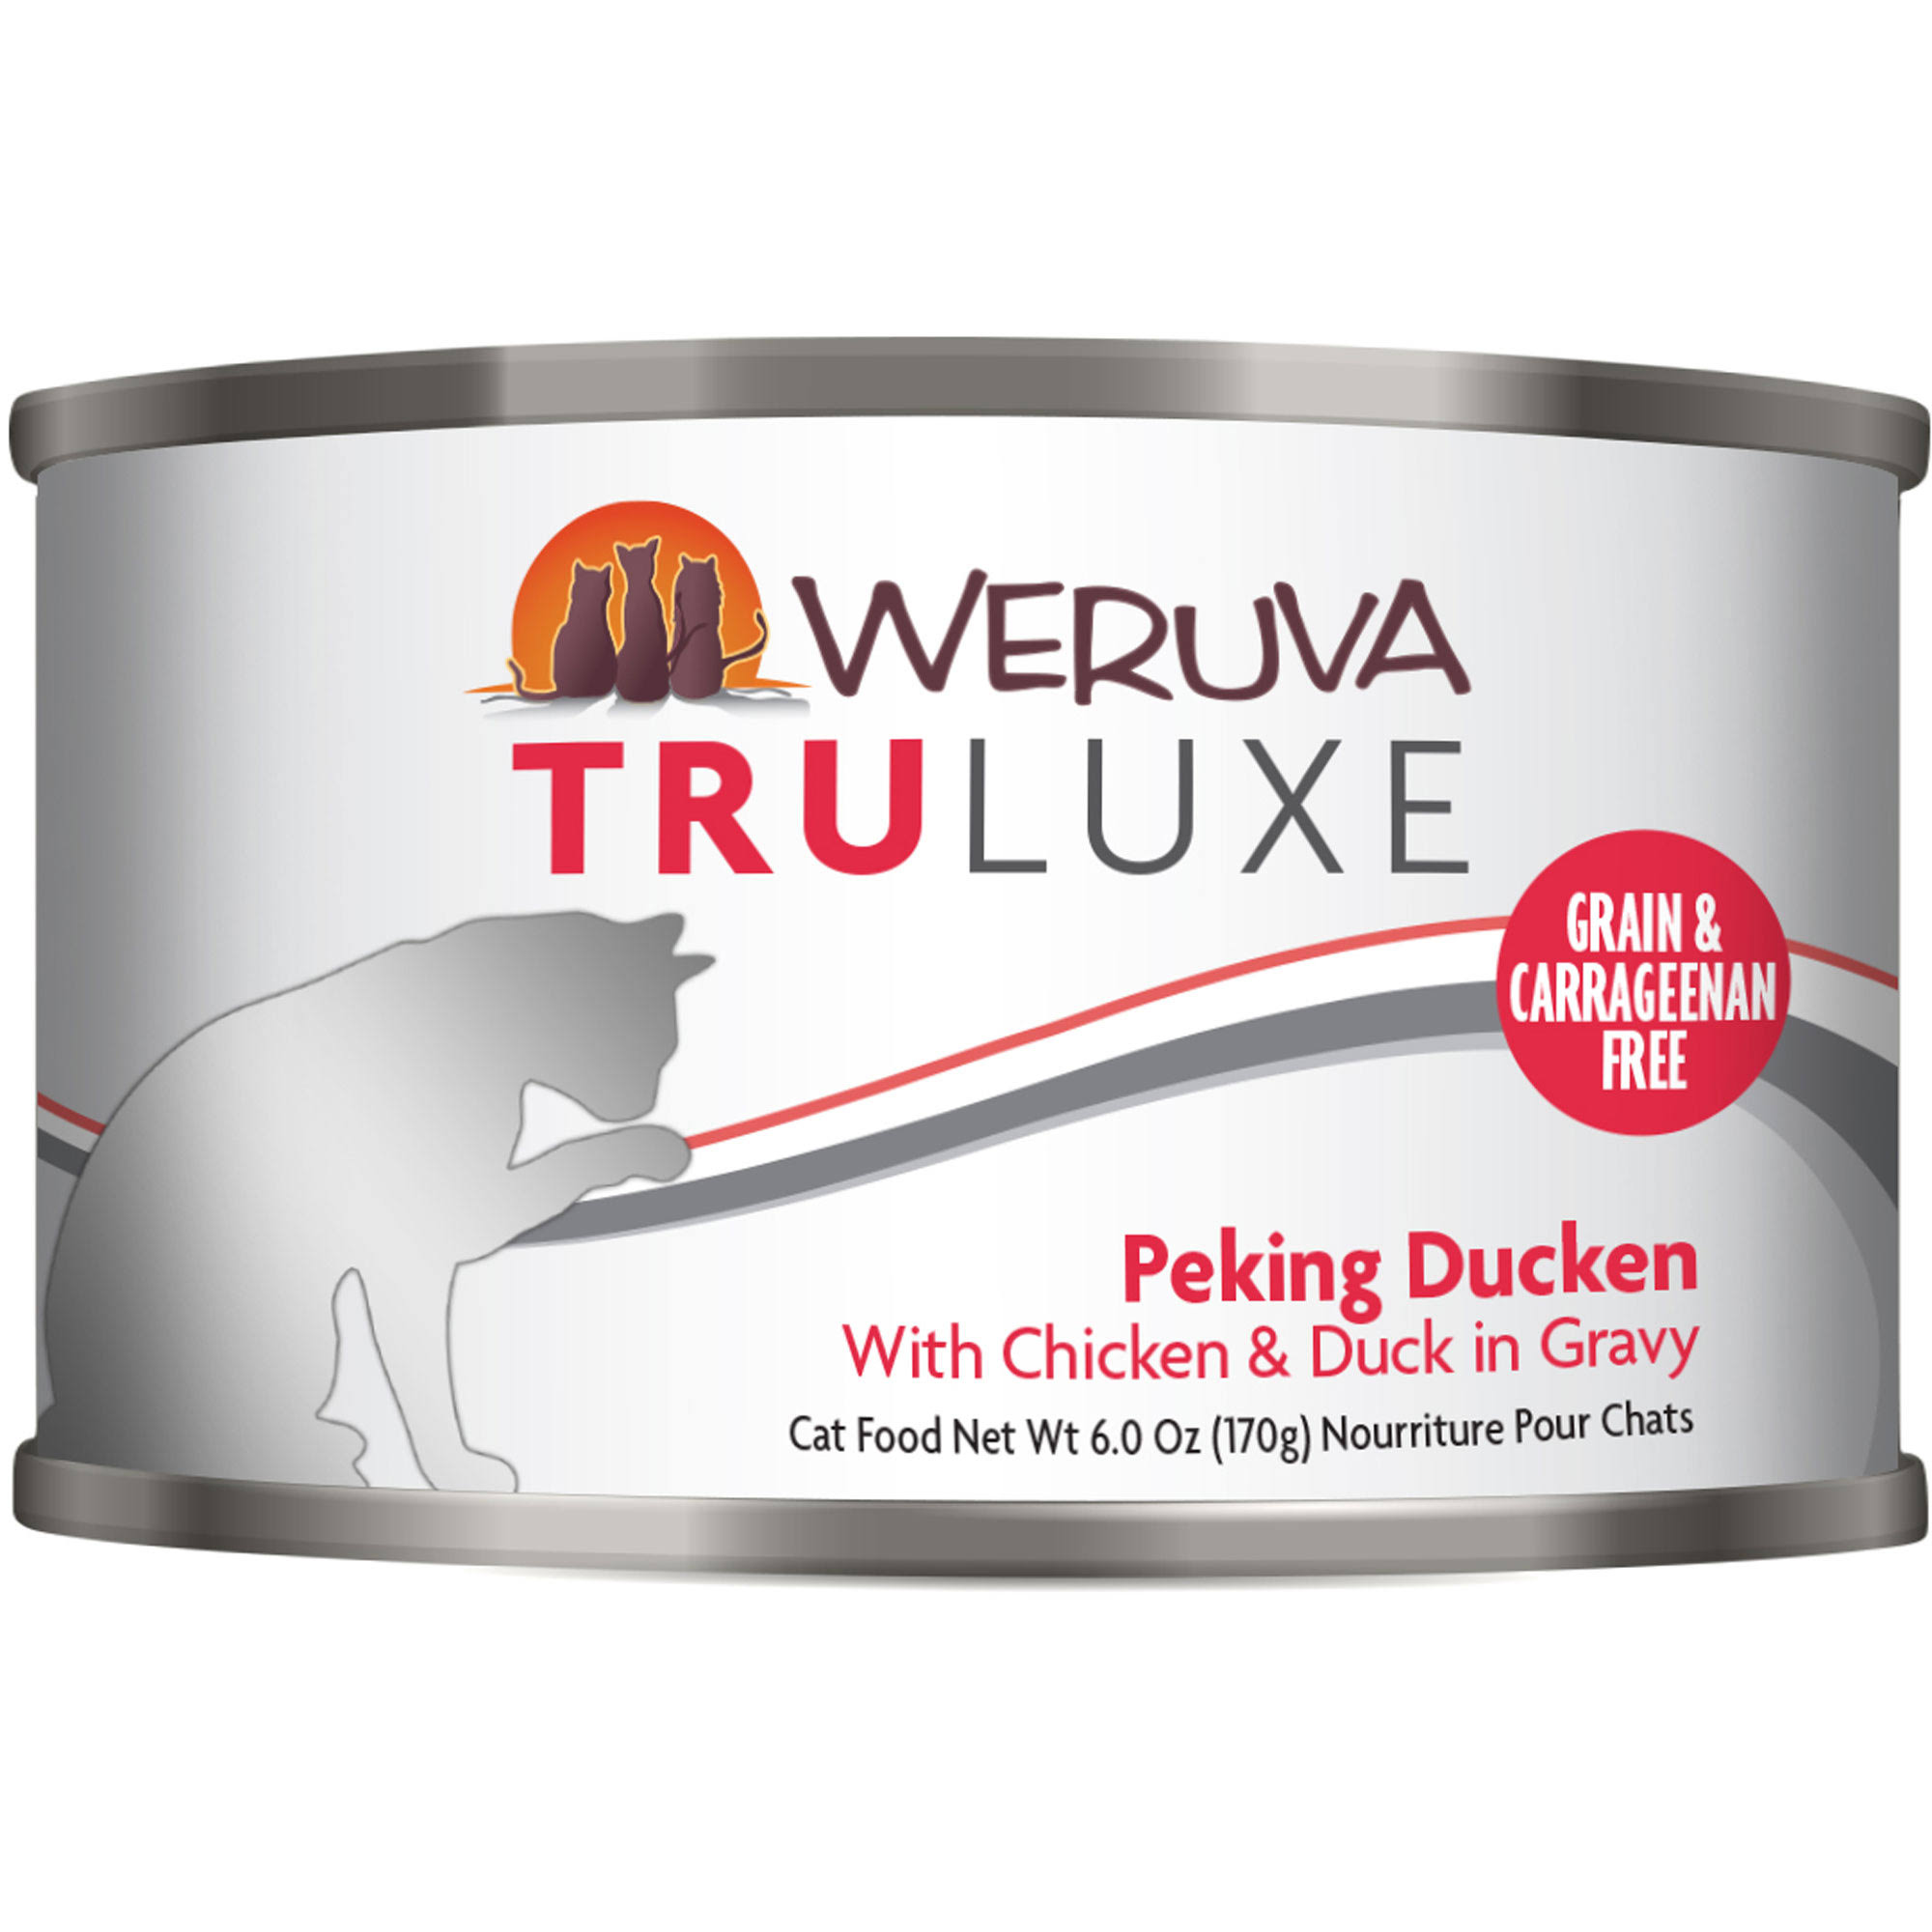 Weruva Grain Free Truluxe Canned Cat Food - Peking Ducken, Adult